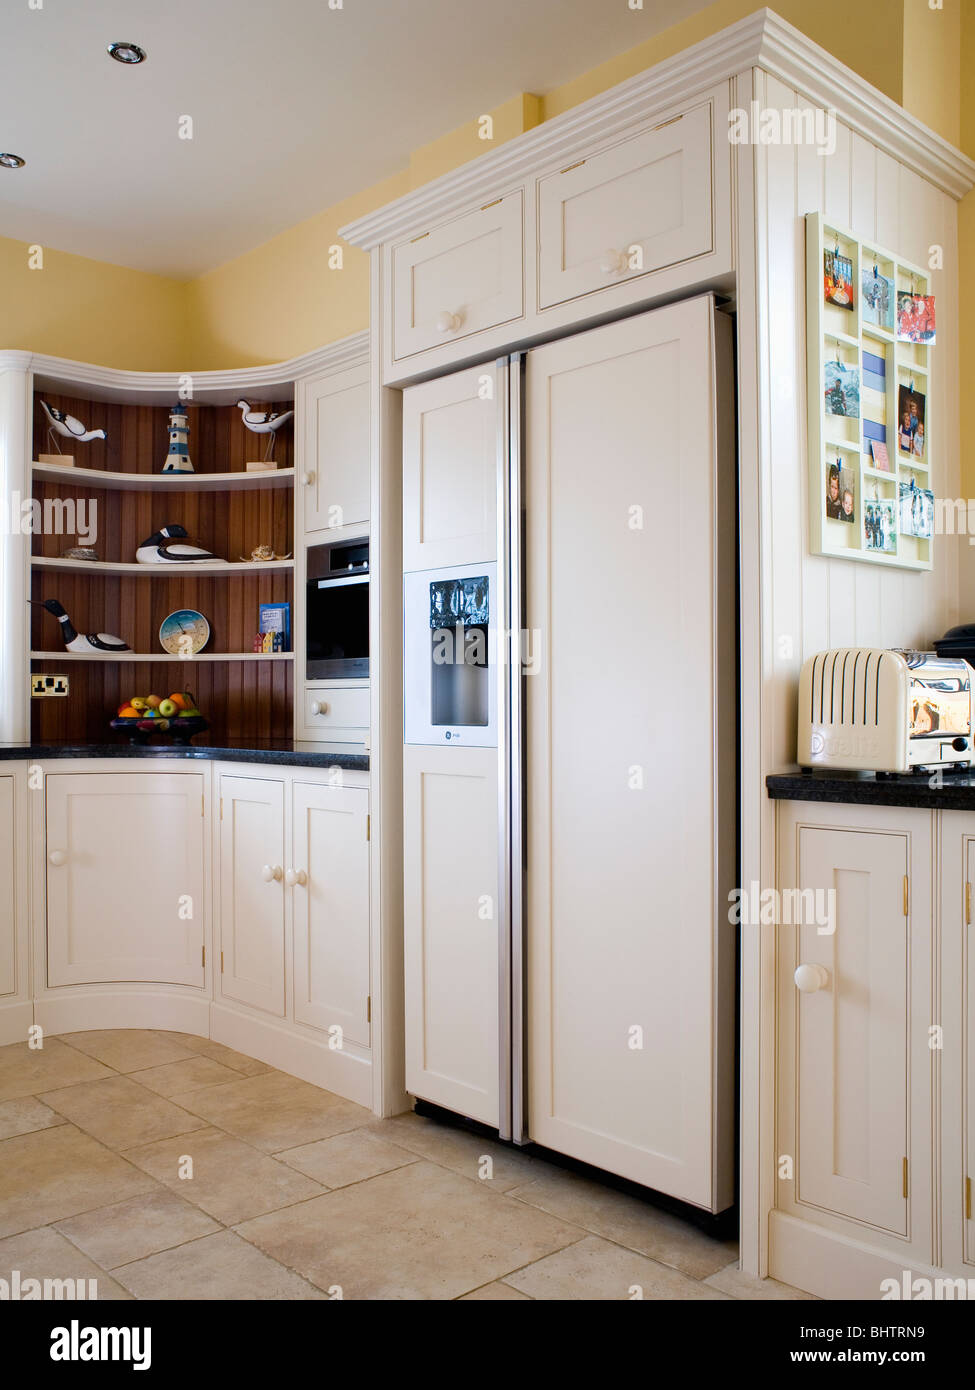 https://c8.alamy.com/comp/BHTRN9/large-american-style-fridge-freezer-in-modern-cream-kitchen-BHTRN9.jpg